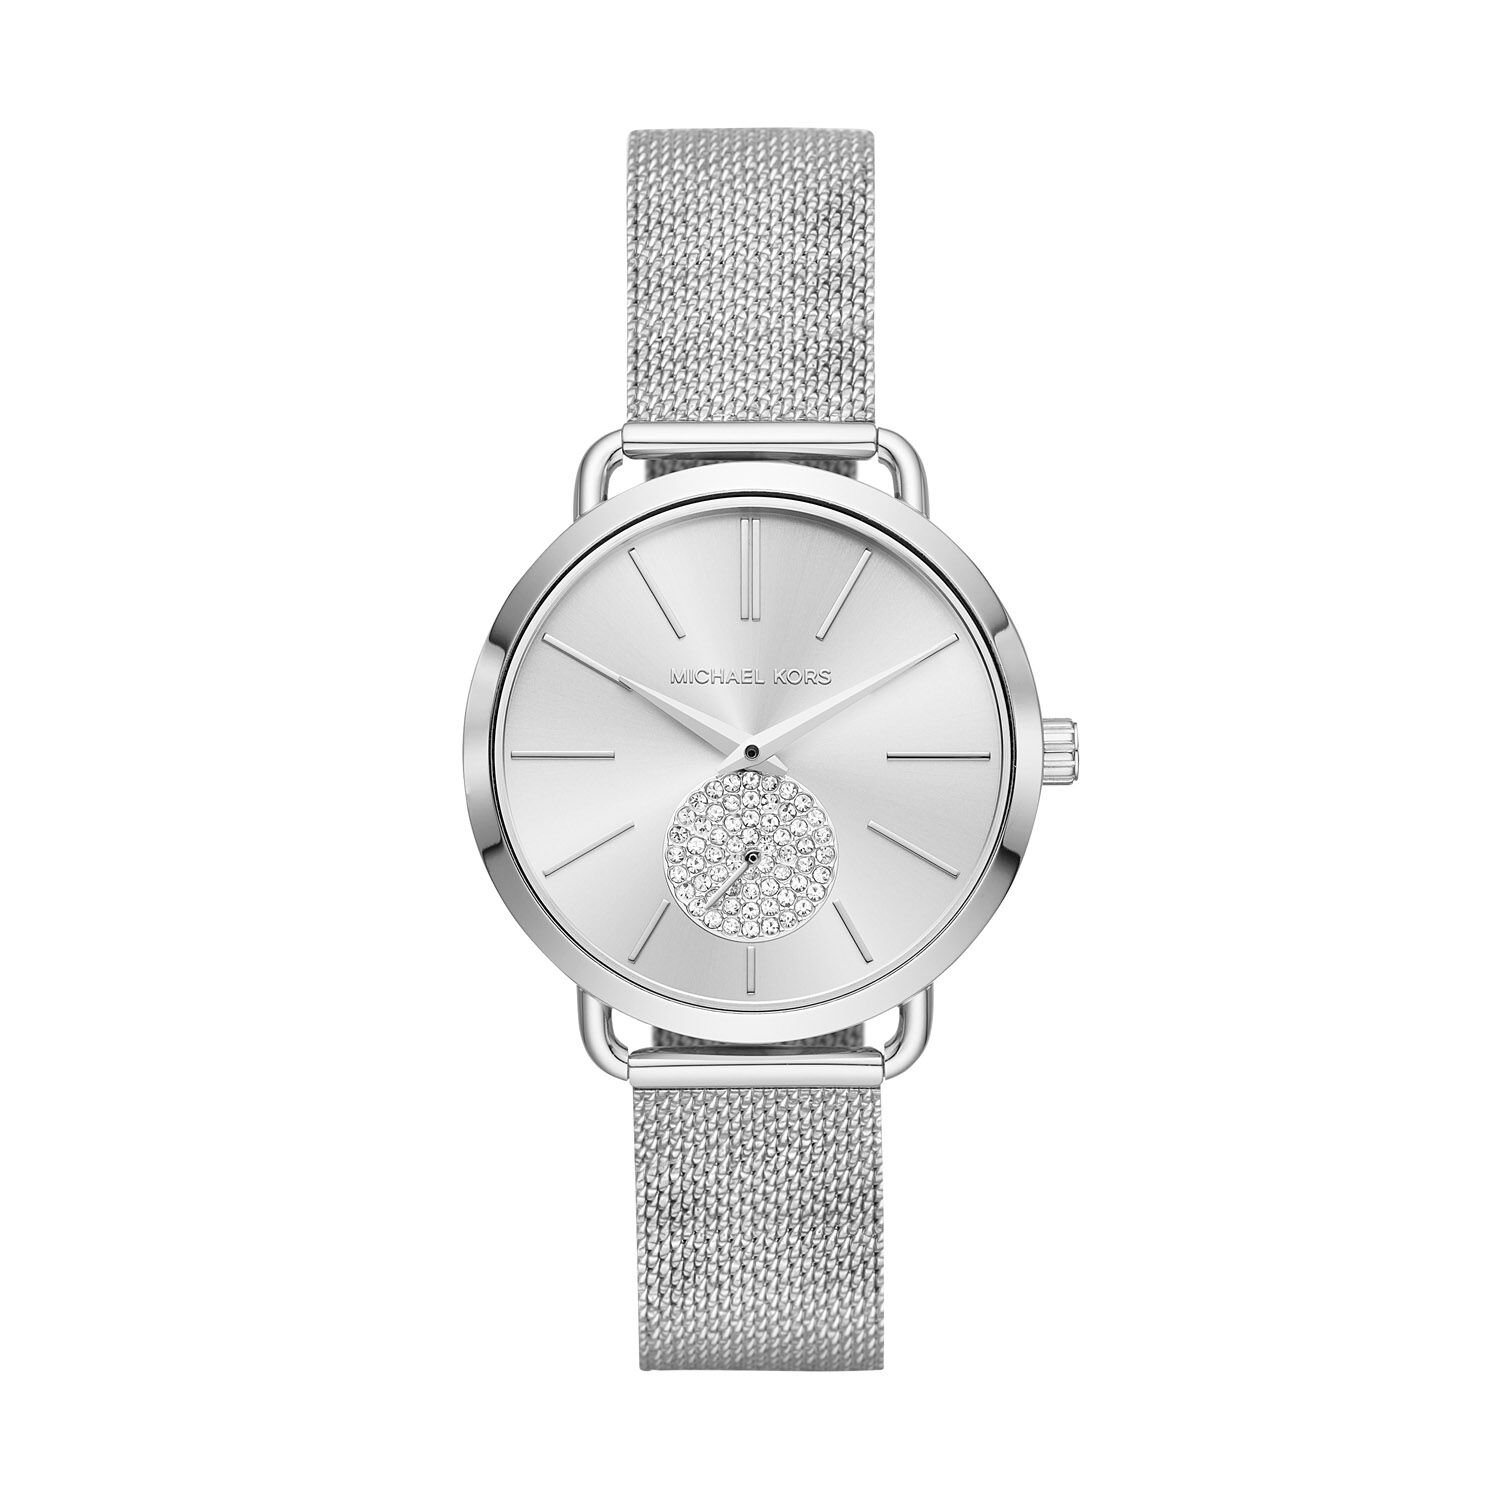 Đồng hồ Michael Kors Ladies watch MK3643  ACAuthentic